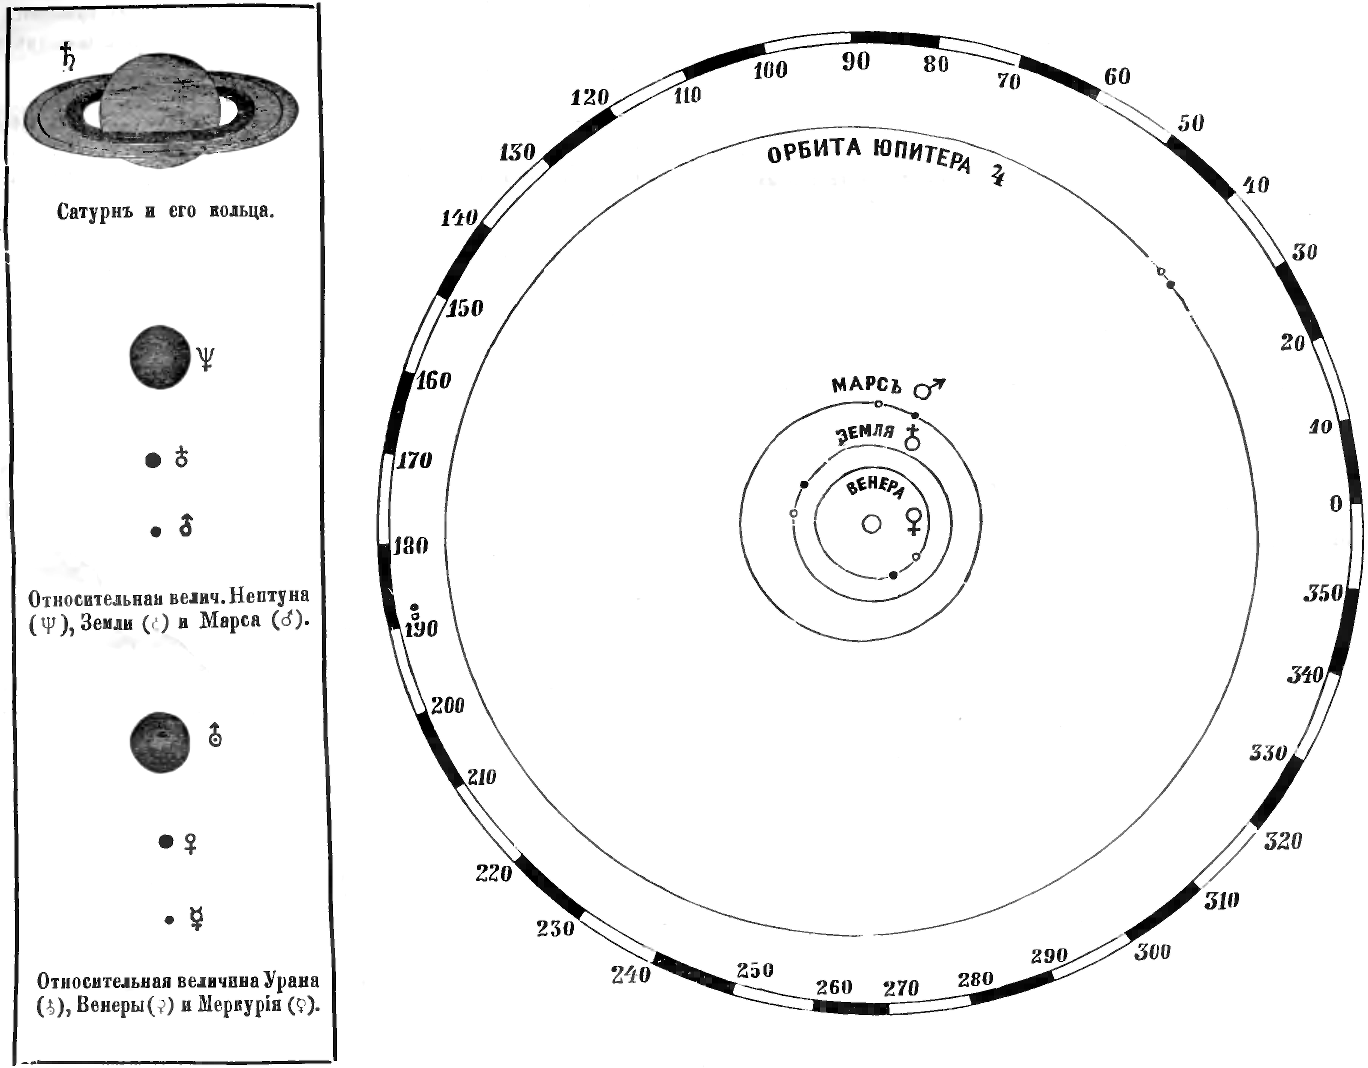 Истинныя положенія земли и яркихъ планетъ на ихъ орбитахъ:
1 февраля (темный кружокъ) и 1 марта 1893 года (свѣтлый кружокъ).
Масштабъ: 1 центиметръ = астрономической единицѣ.